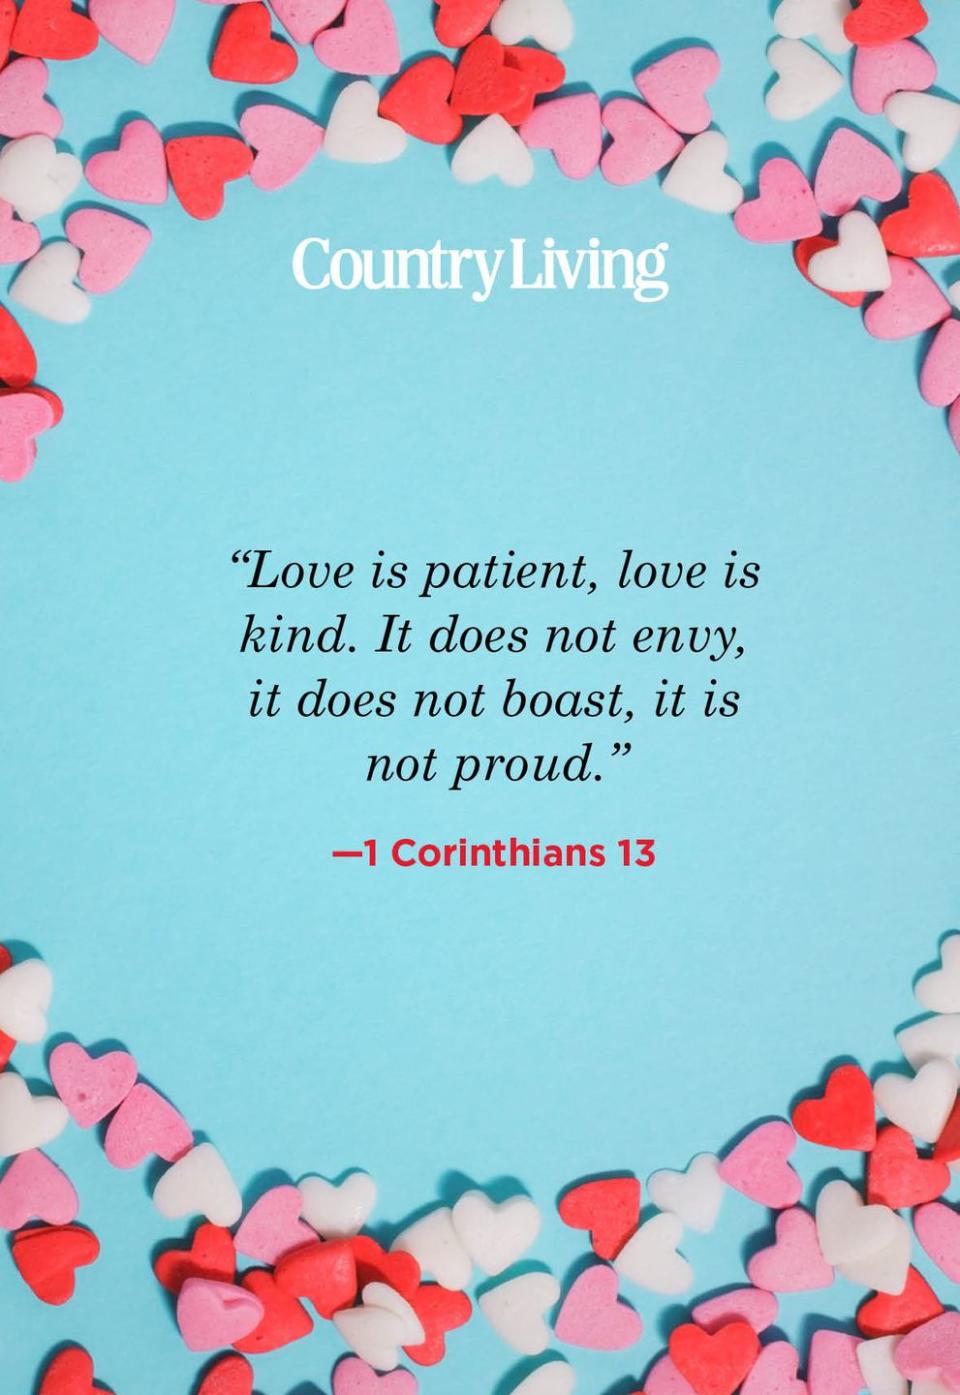 12) 1 Corinthians 13